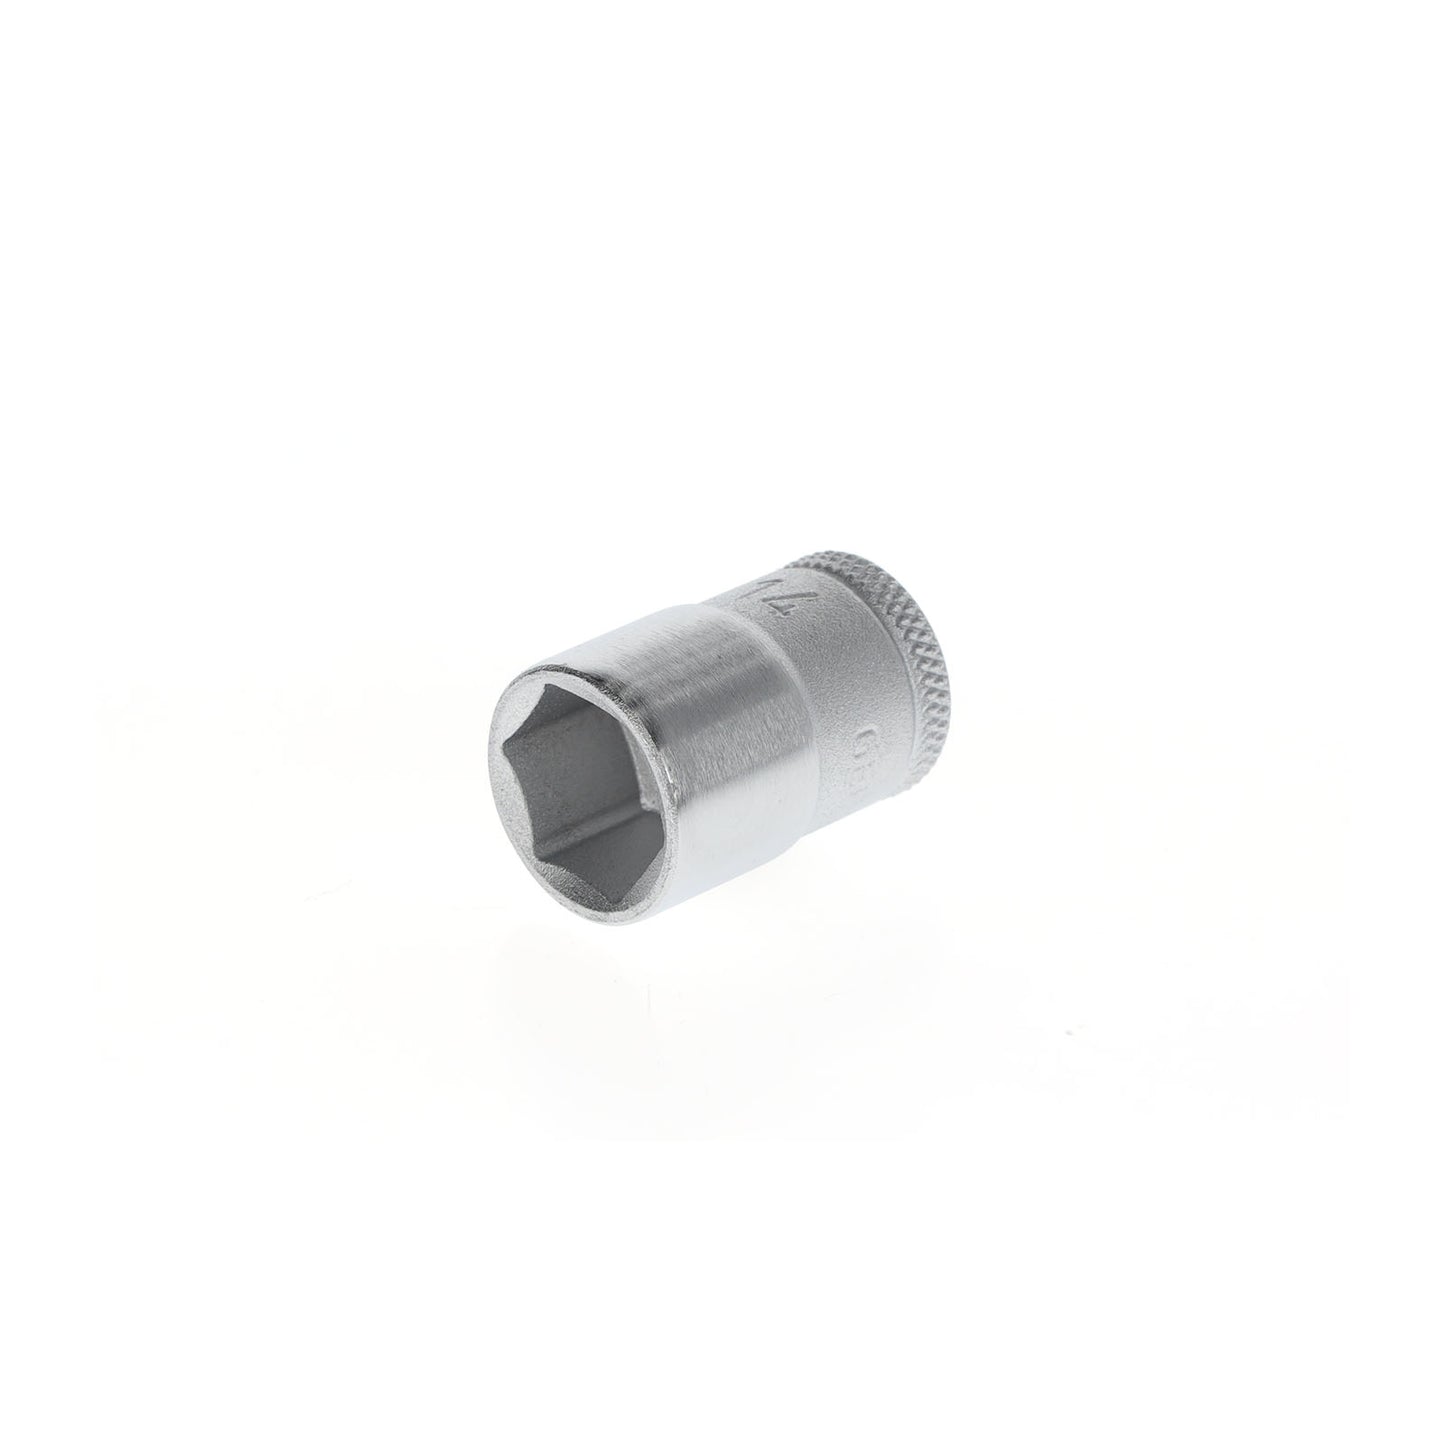 GEDORE 30 14 - Hexagonal Socket 3/8", 14 mm (6234150)